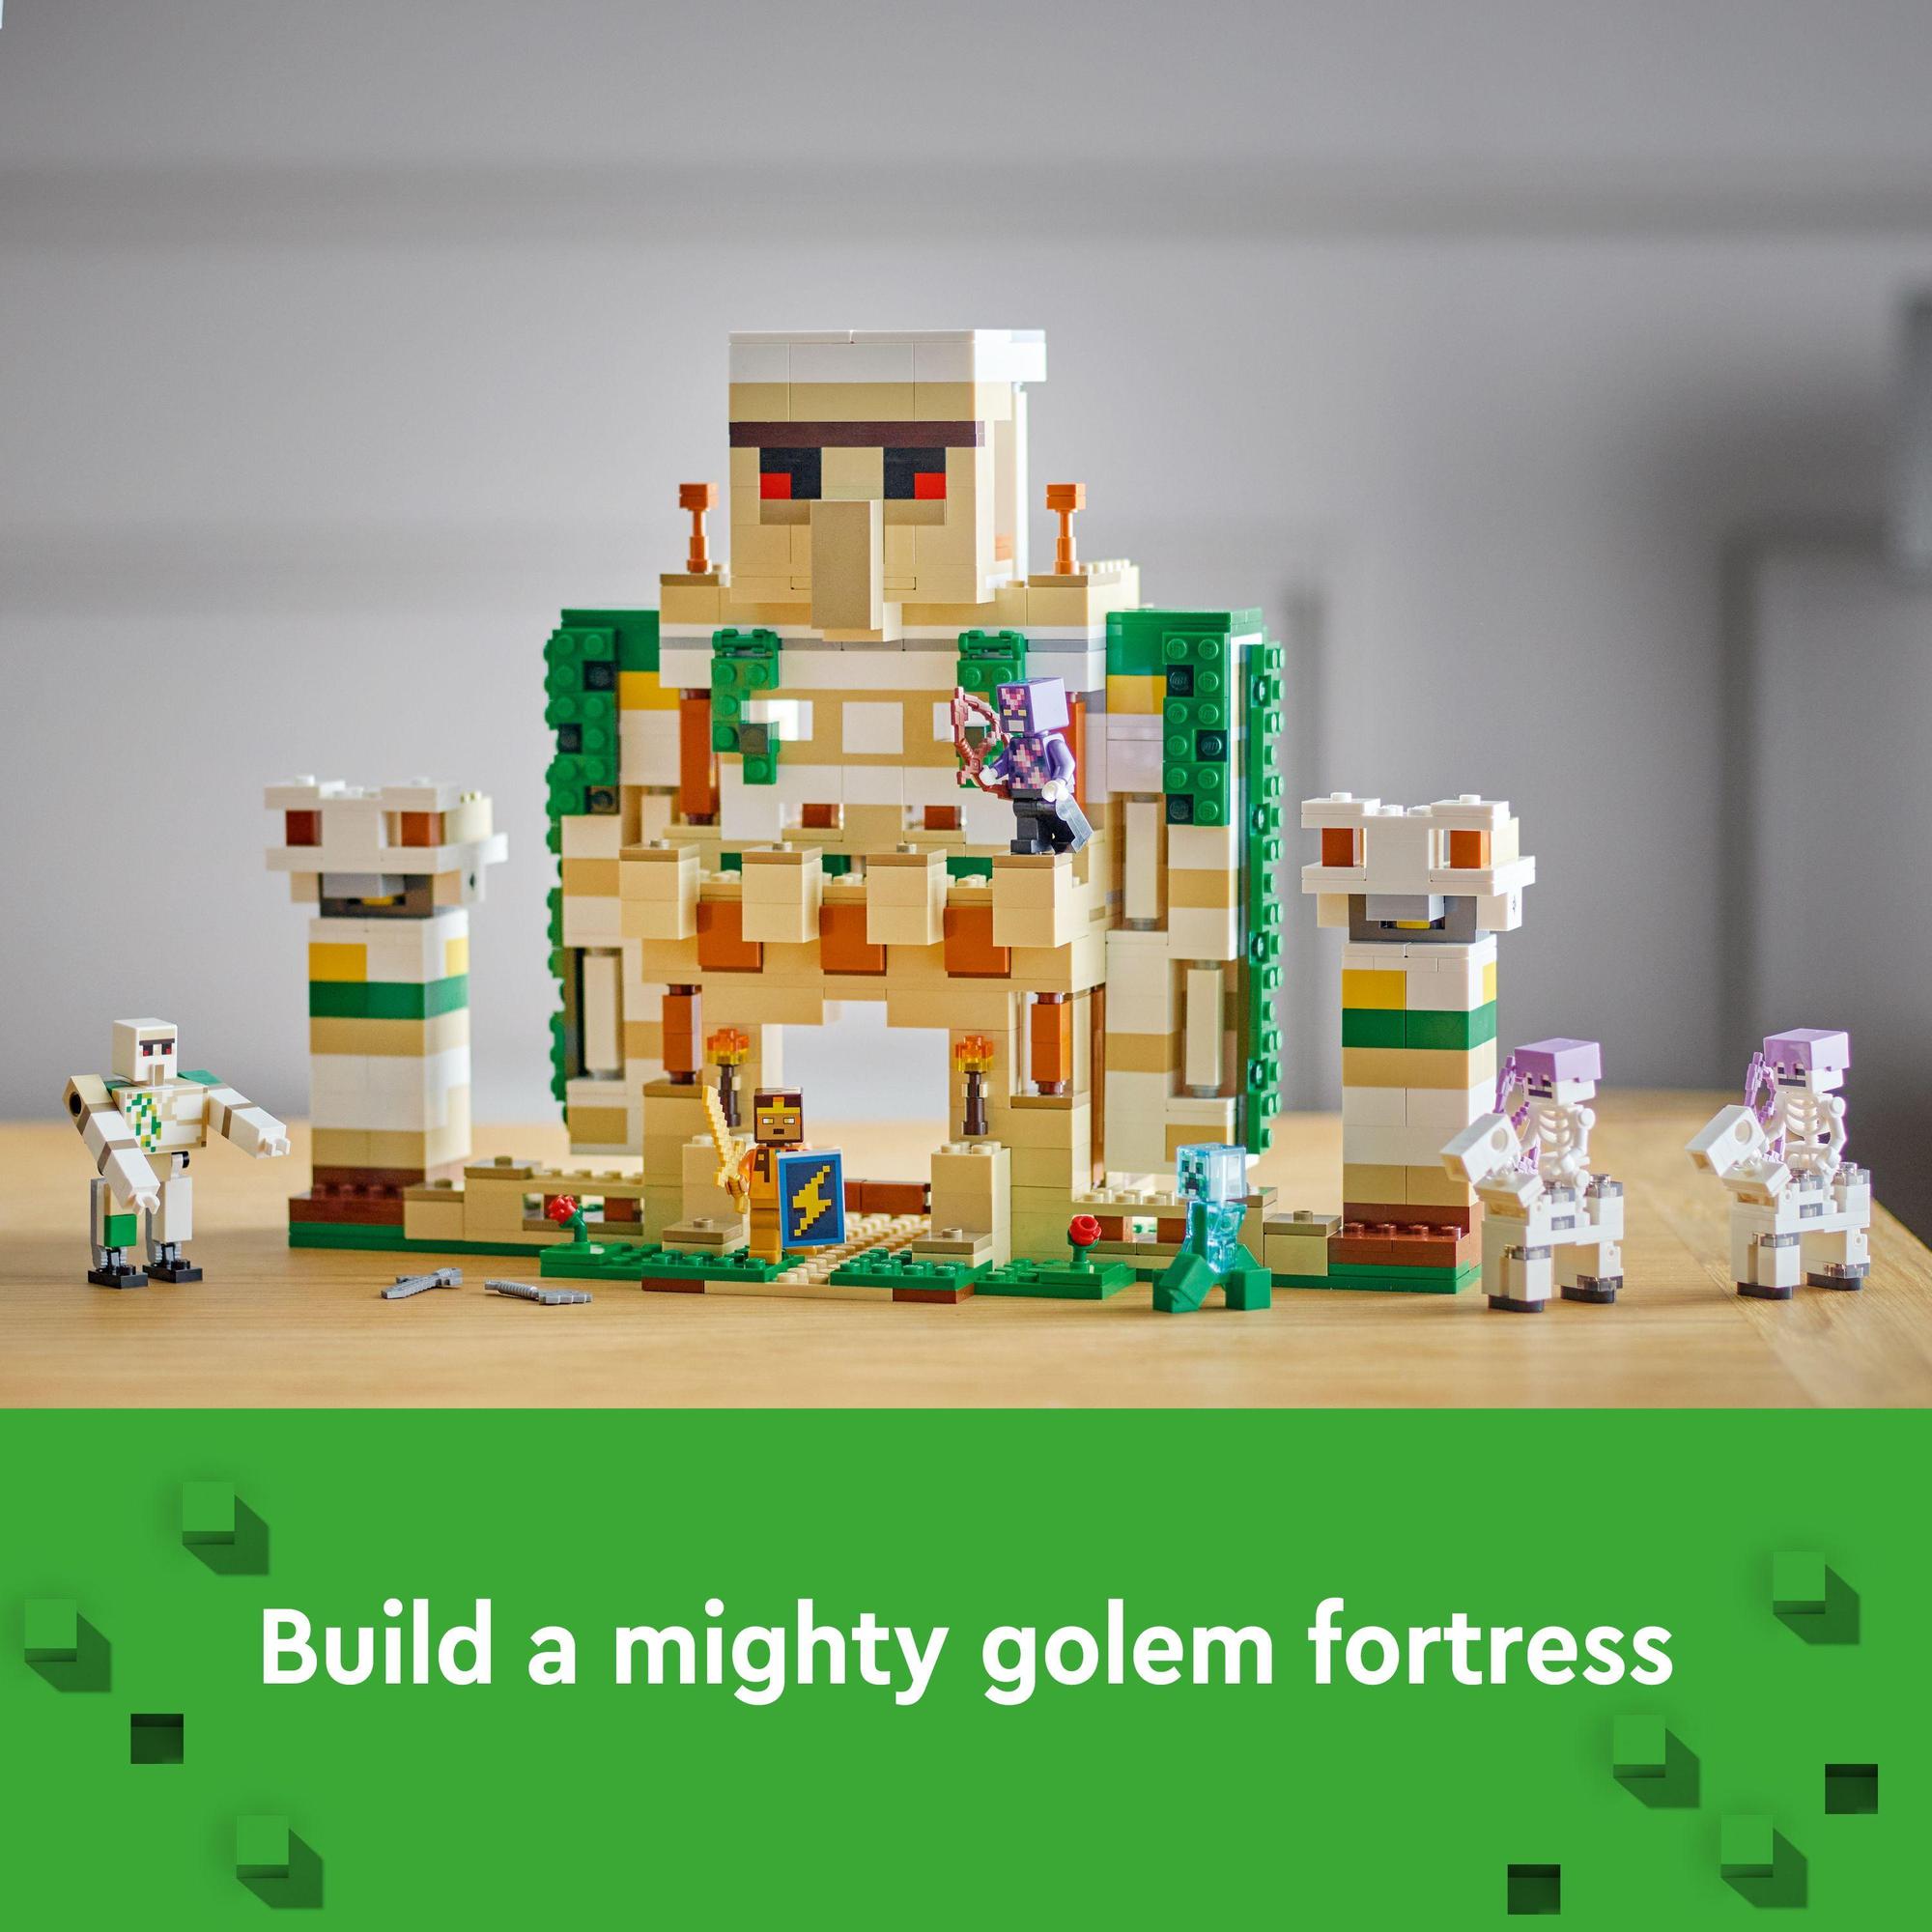 LEGO Minecraft 21250 Đồ chơi lắp ráp Iron Golem Fortress (868 chi tiết)